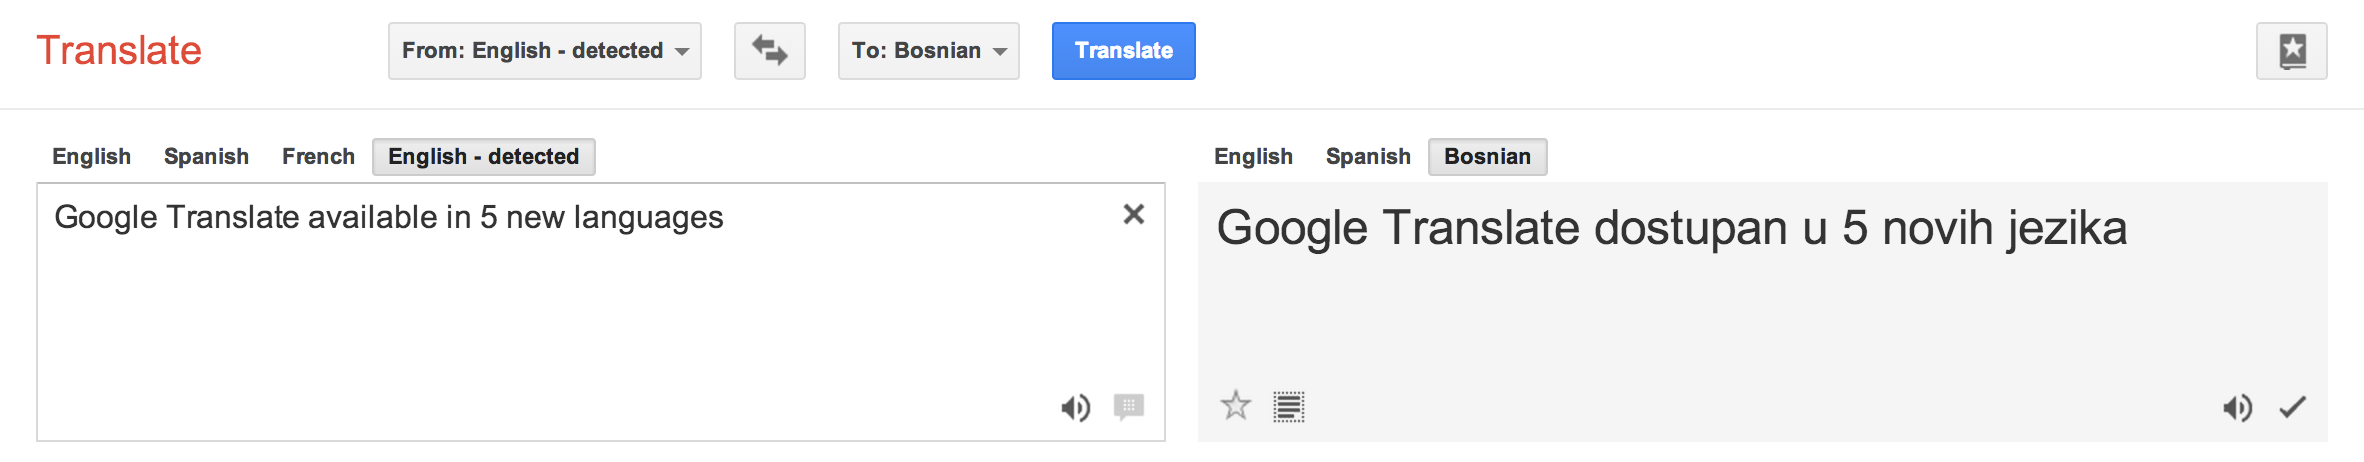 Google-Translate-Bosnian